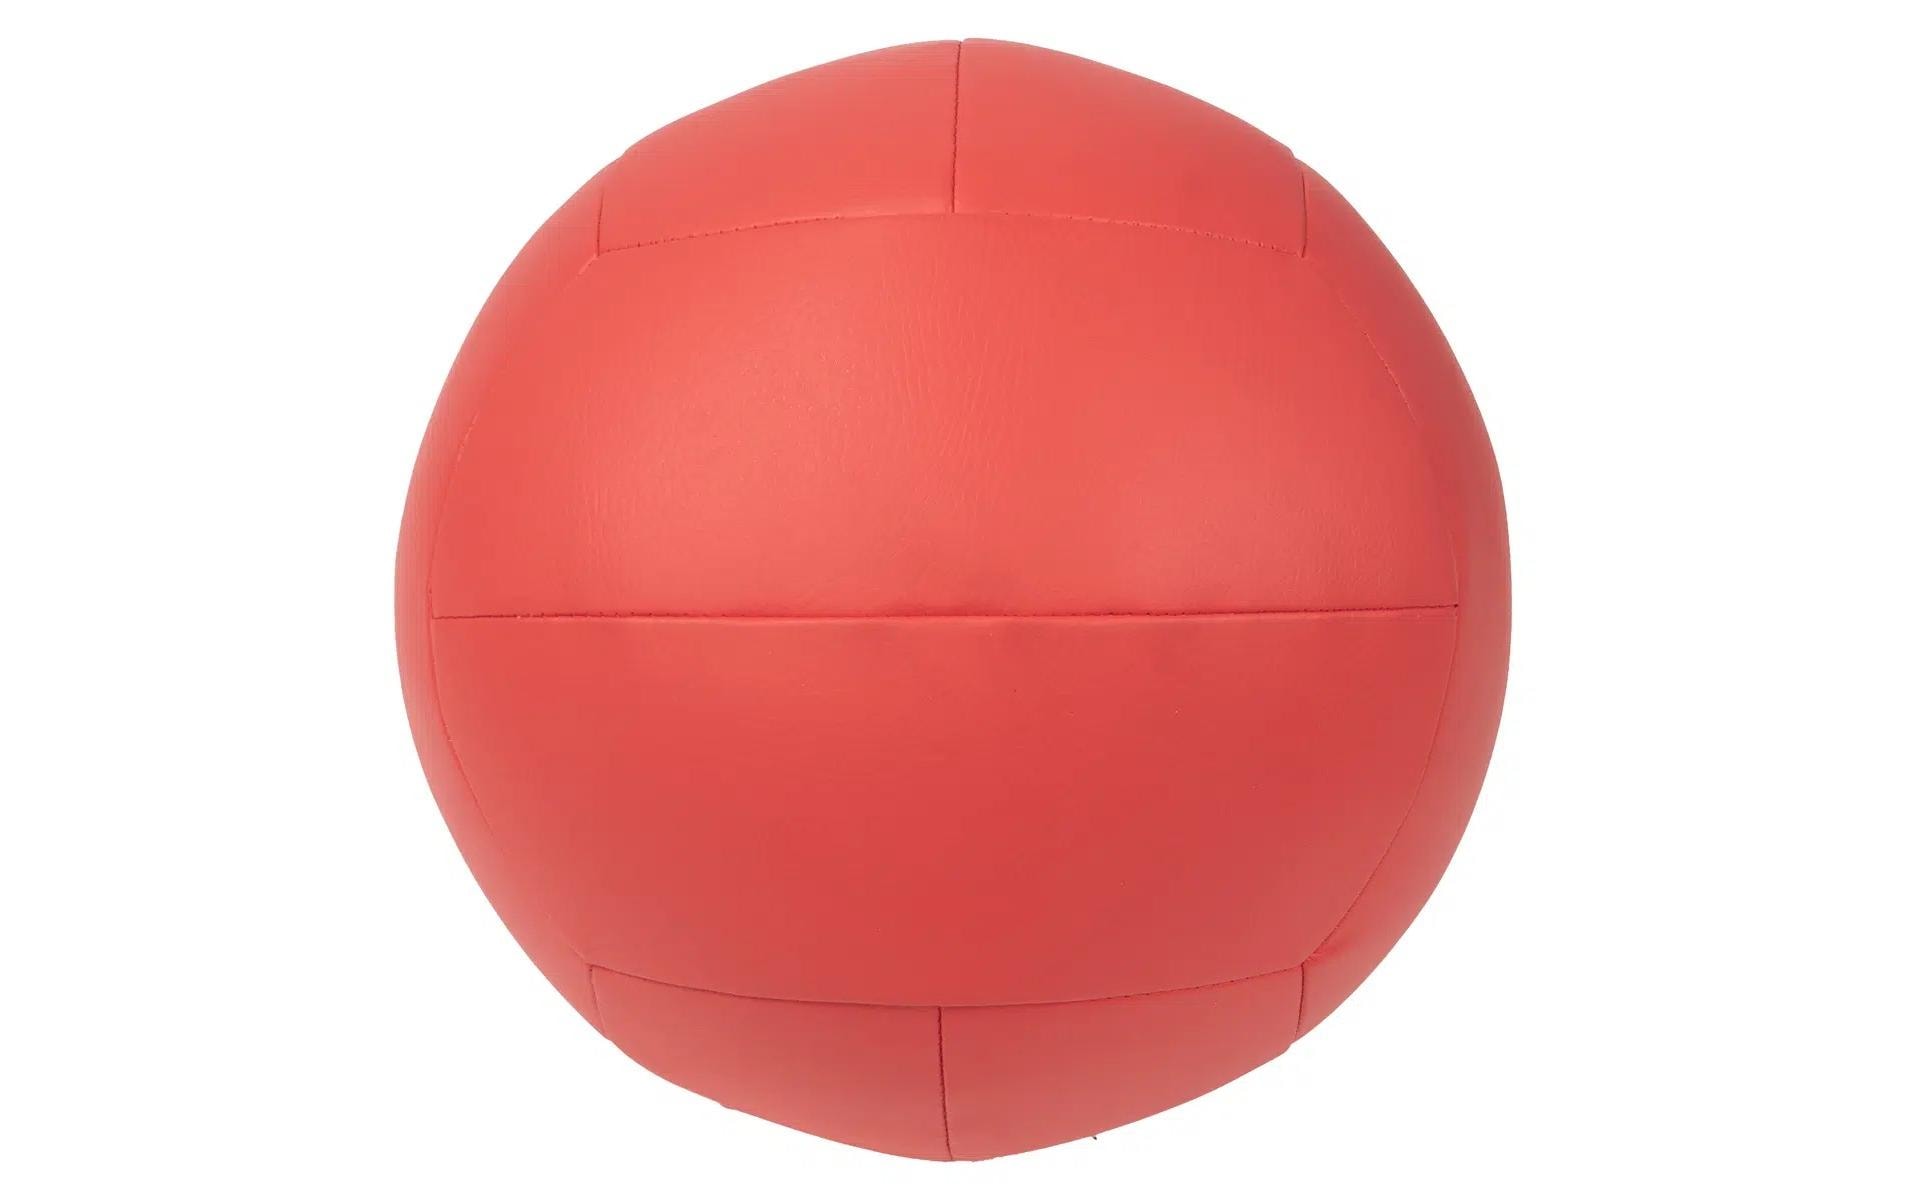 Gladiatorfit Medizinball Ultra-strapazierfähiger Wall Ball 4 kg